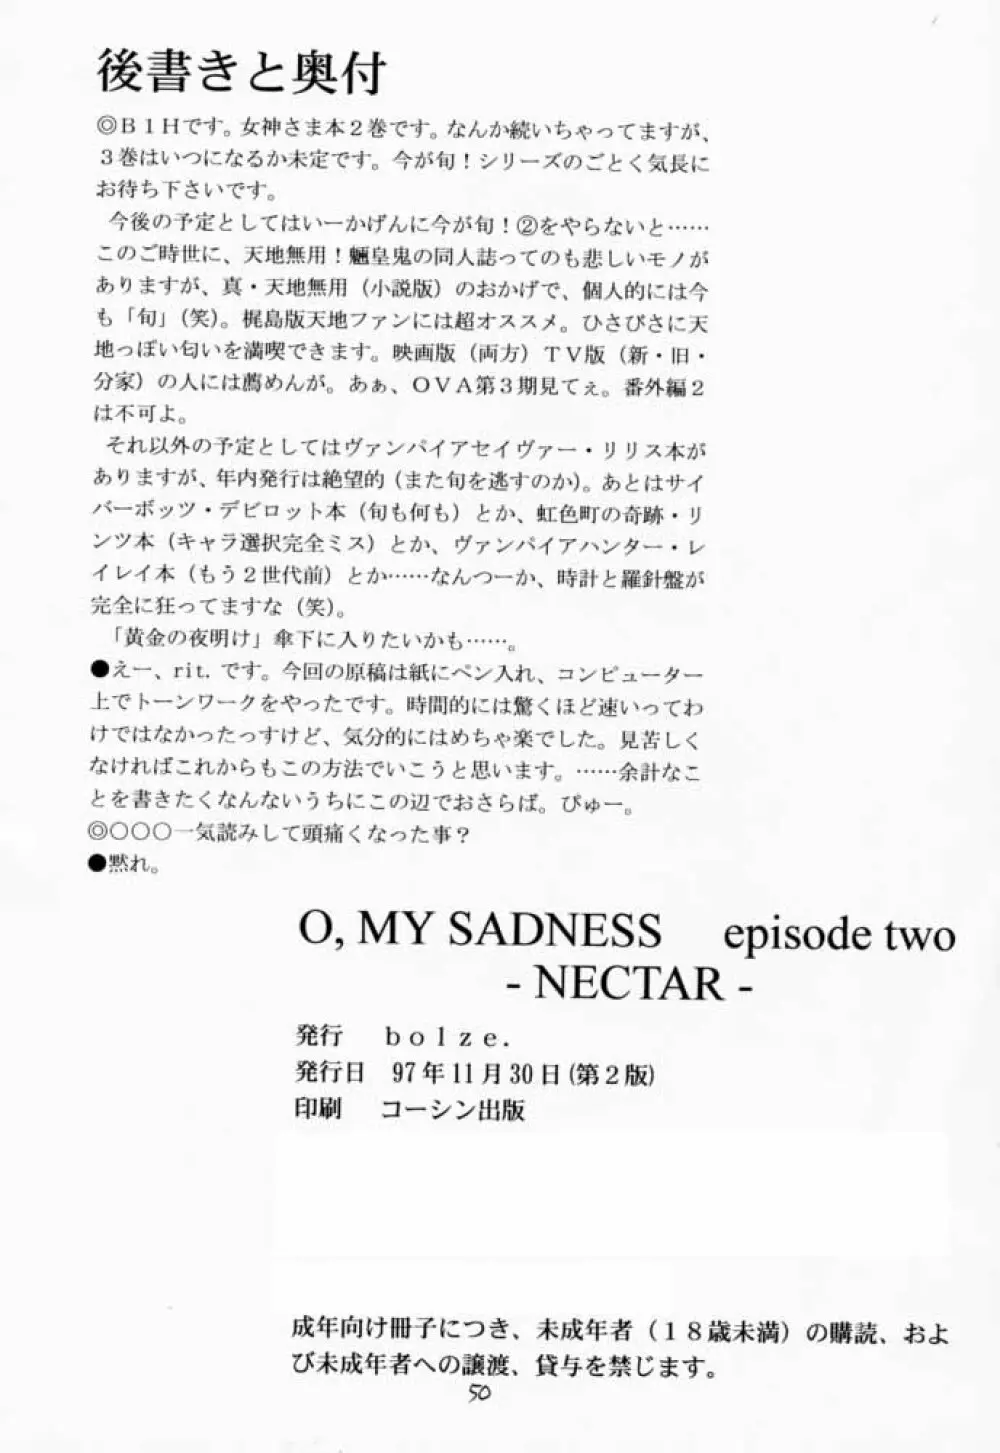 O,My Sadness Episode #2 -NECTAR- 49ページ